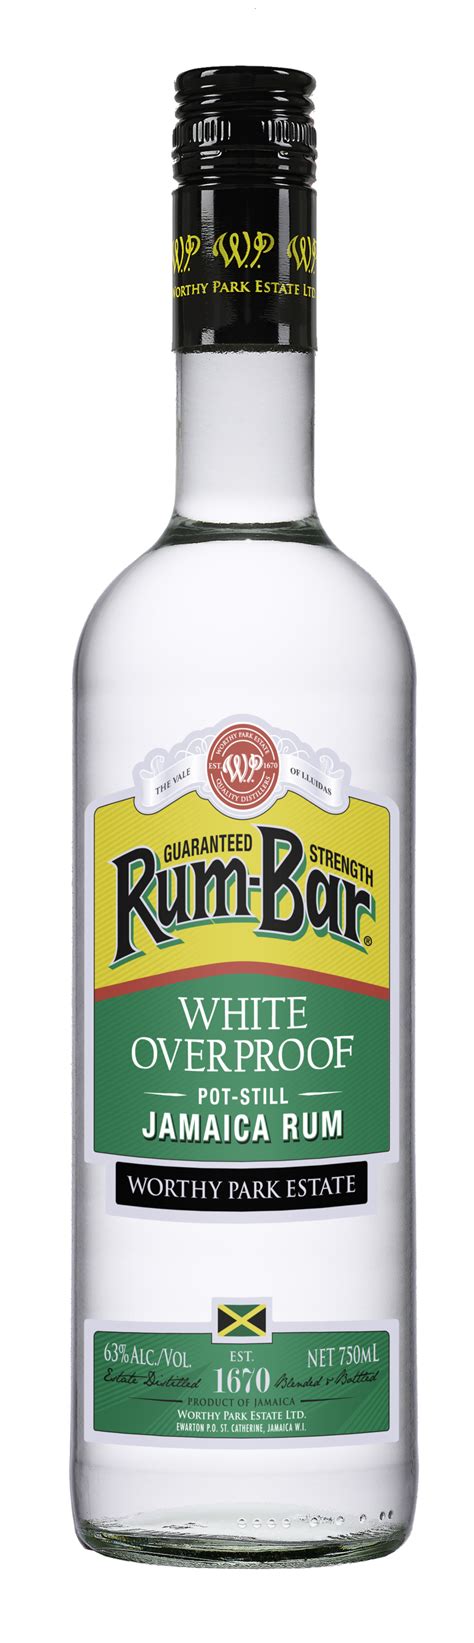 Worthy Park Estate Rum Bar White Overproof Rum Club Oenologique